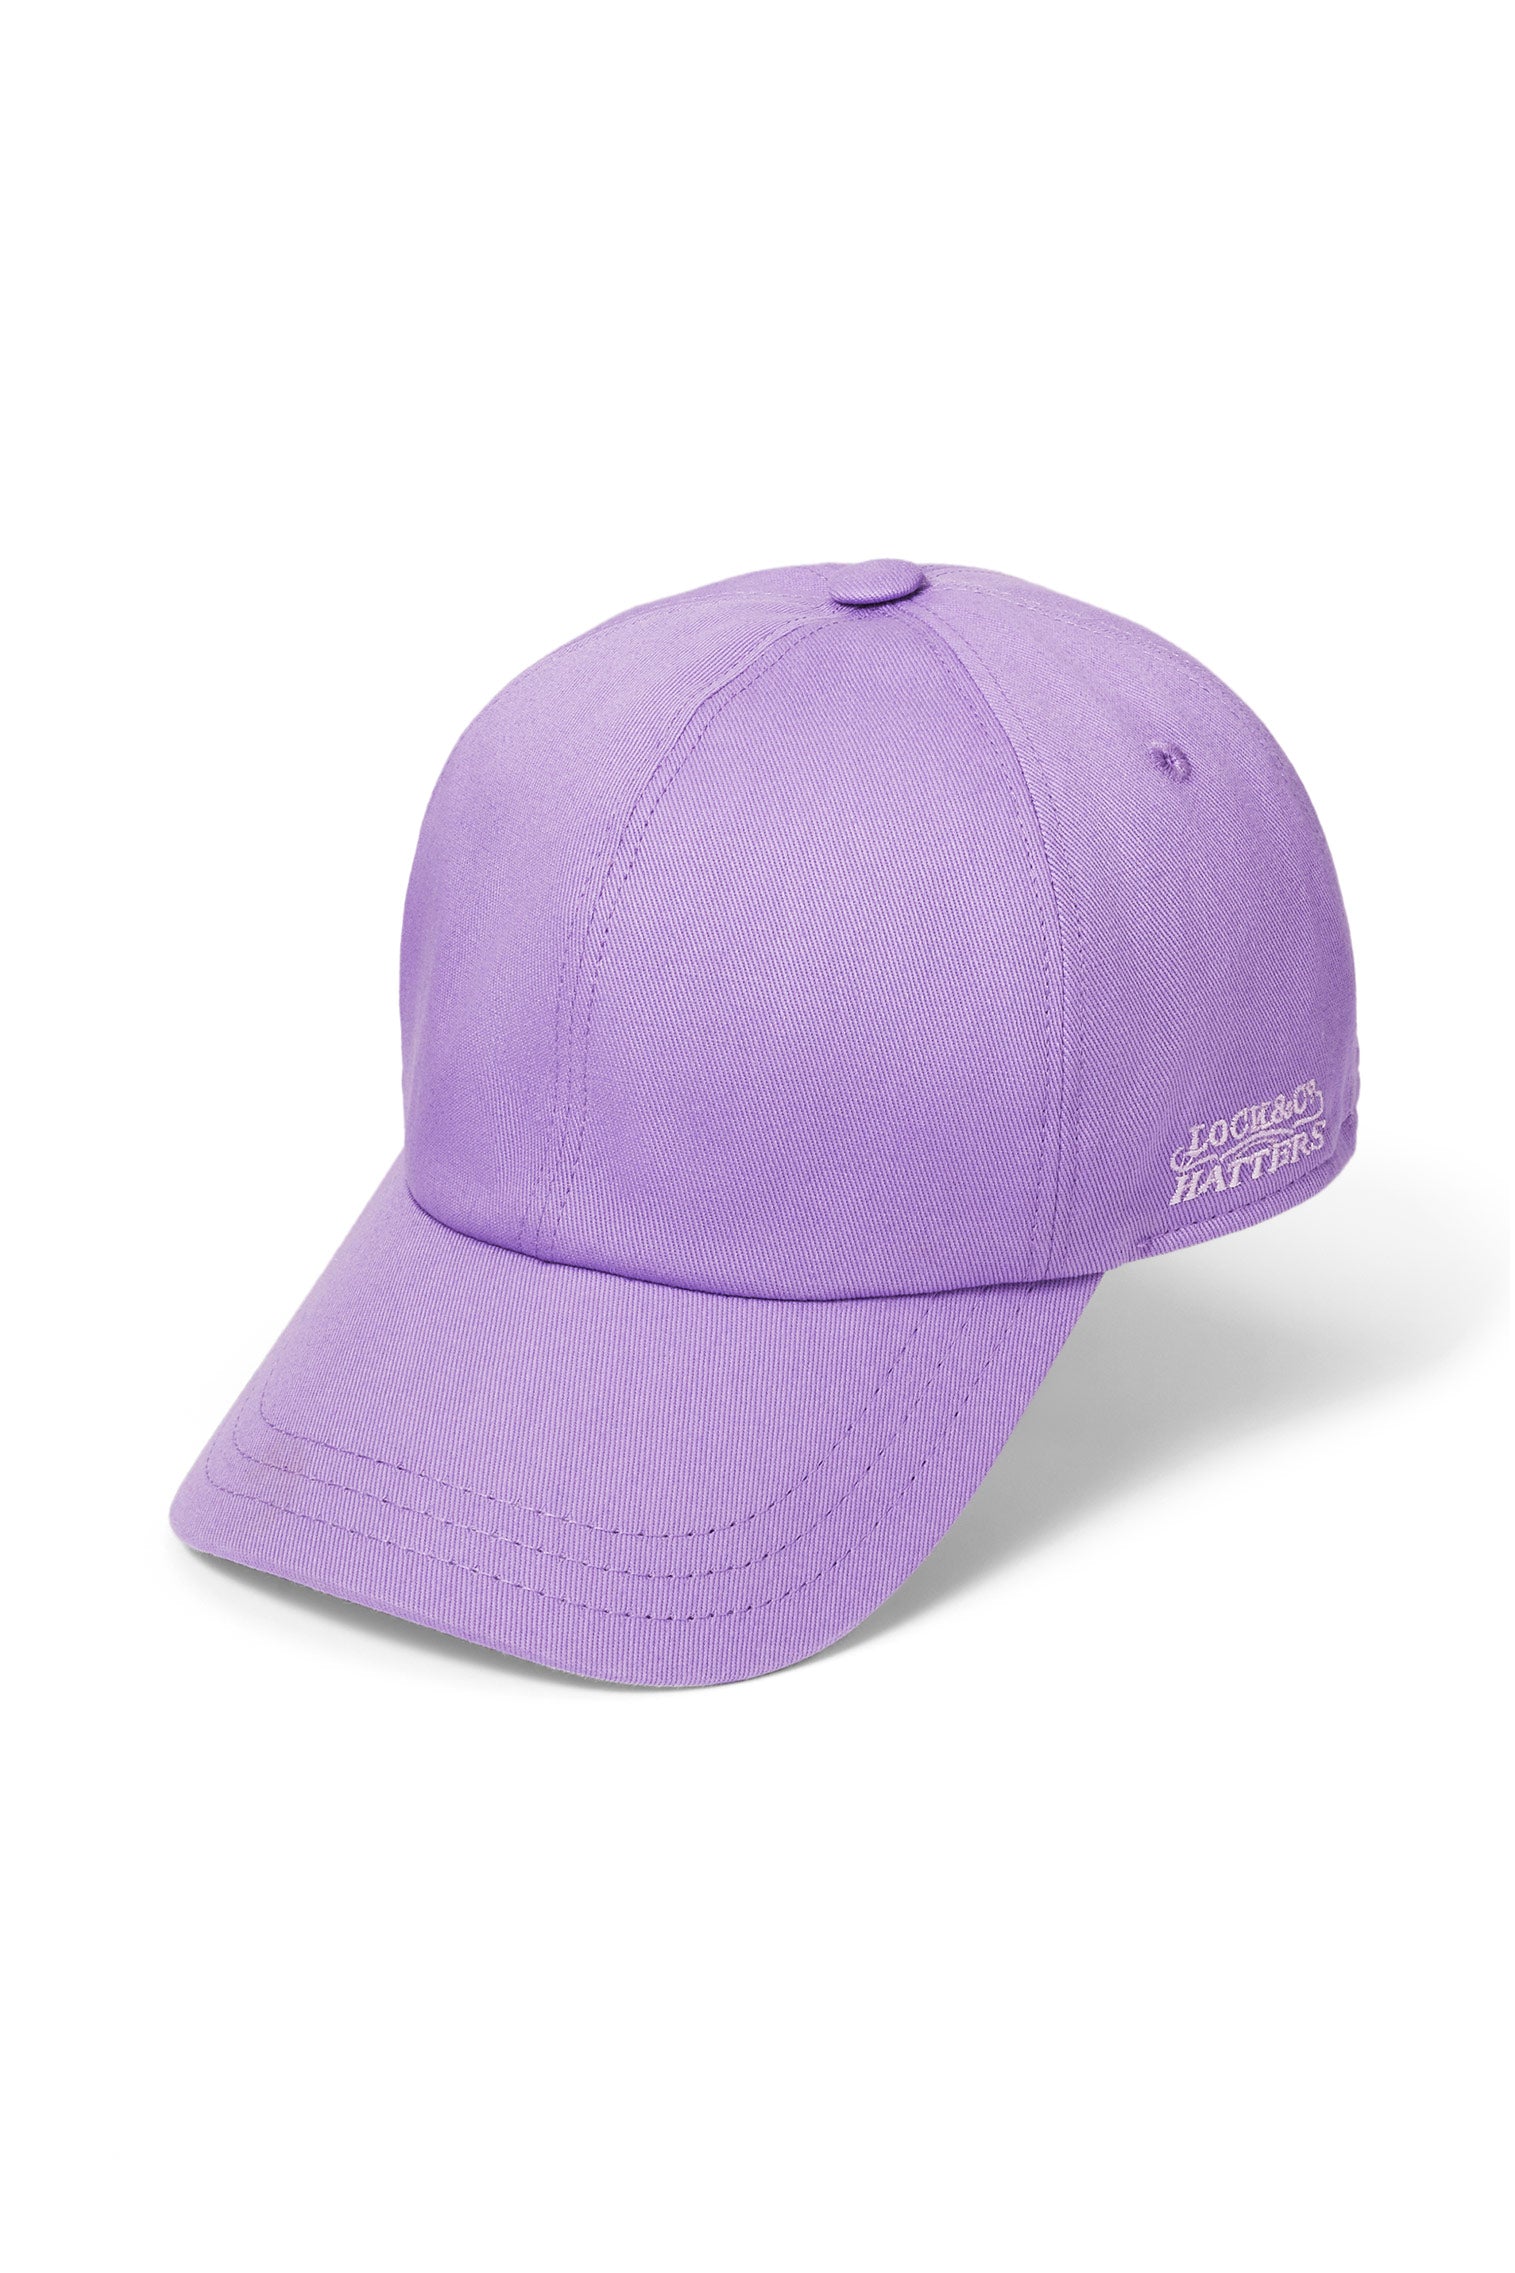 Adjustable Purple Baseball Cap - Womens Featured - Lock & Co. Hatters London UK